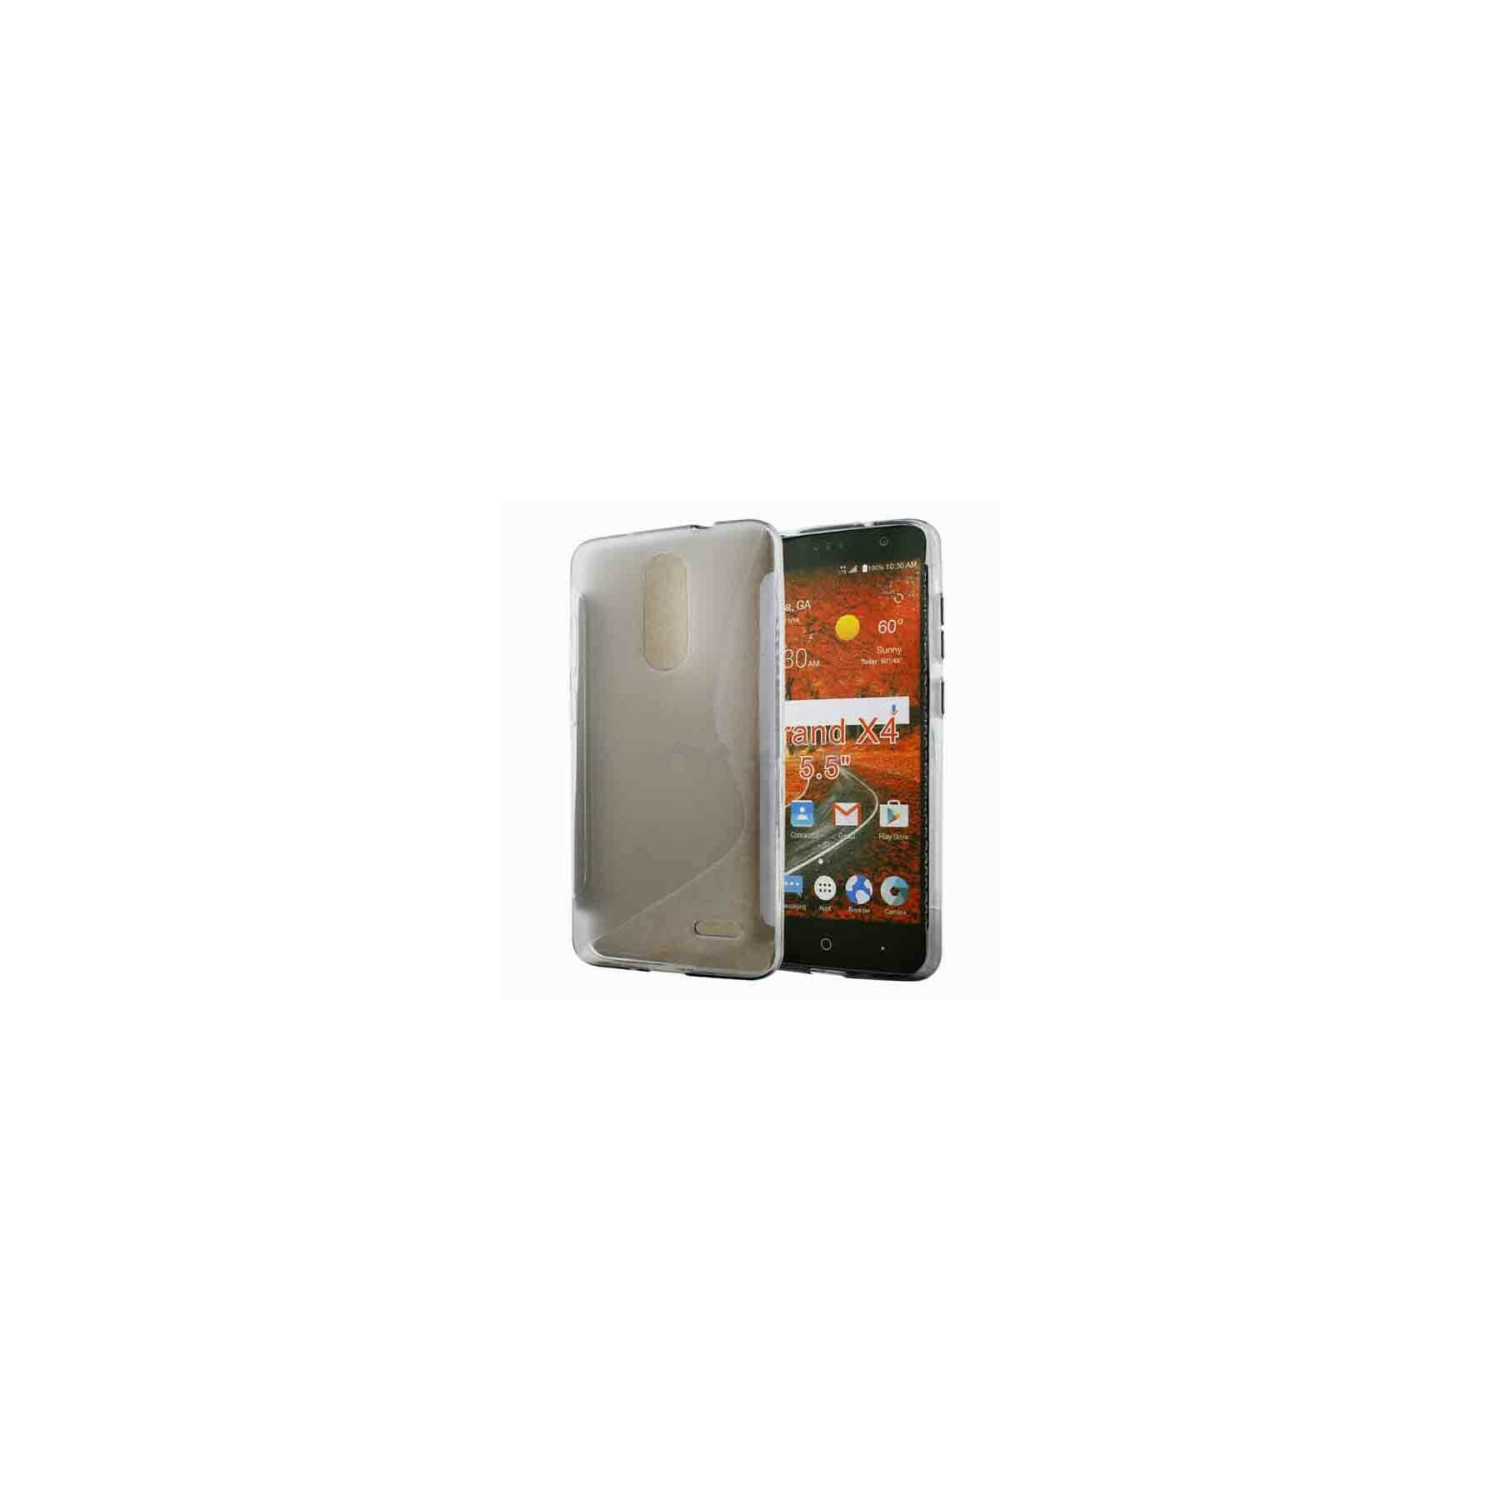 【CSmart】 Ultra Thin Soft TPU Silicone Jelly Bumper Back Cover Case for ZTE Grand X4, Smoke